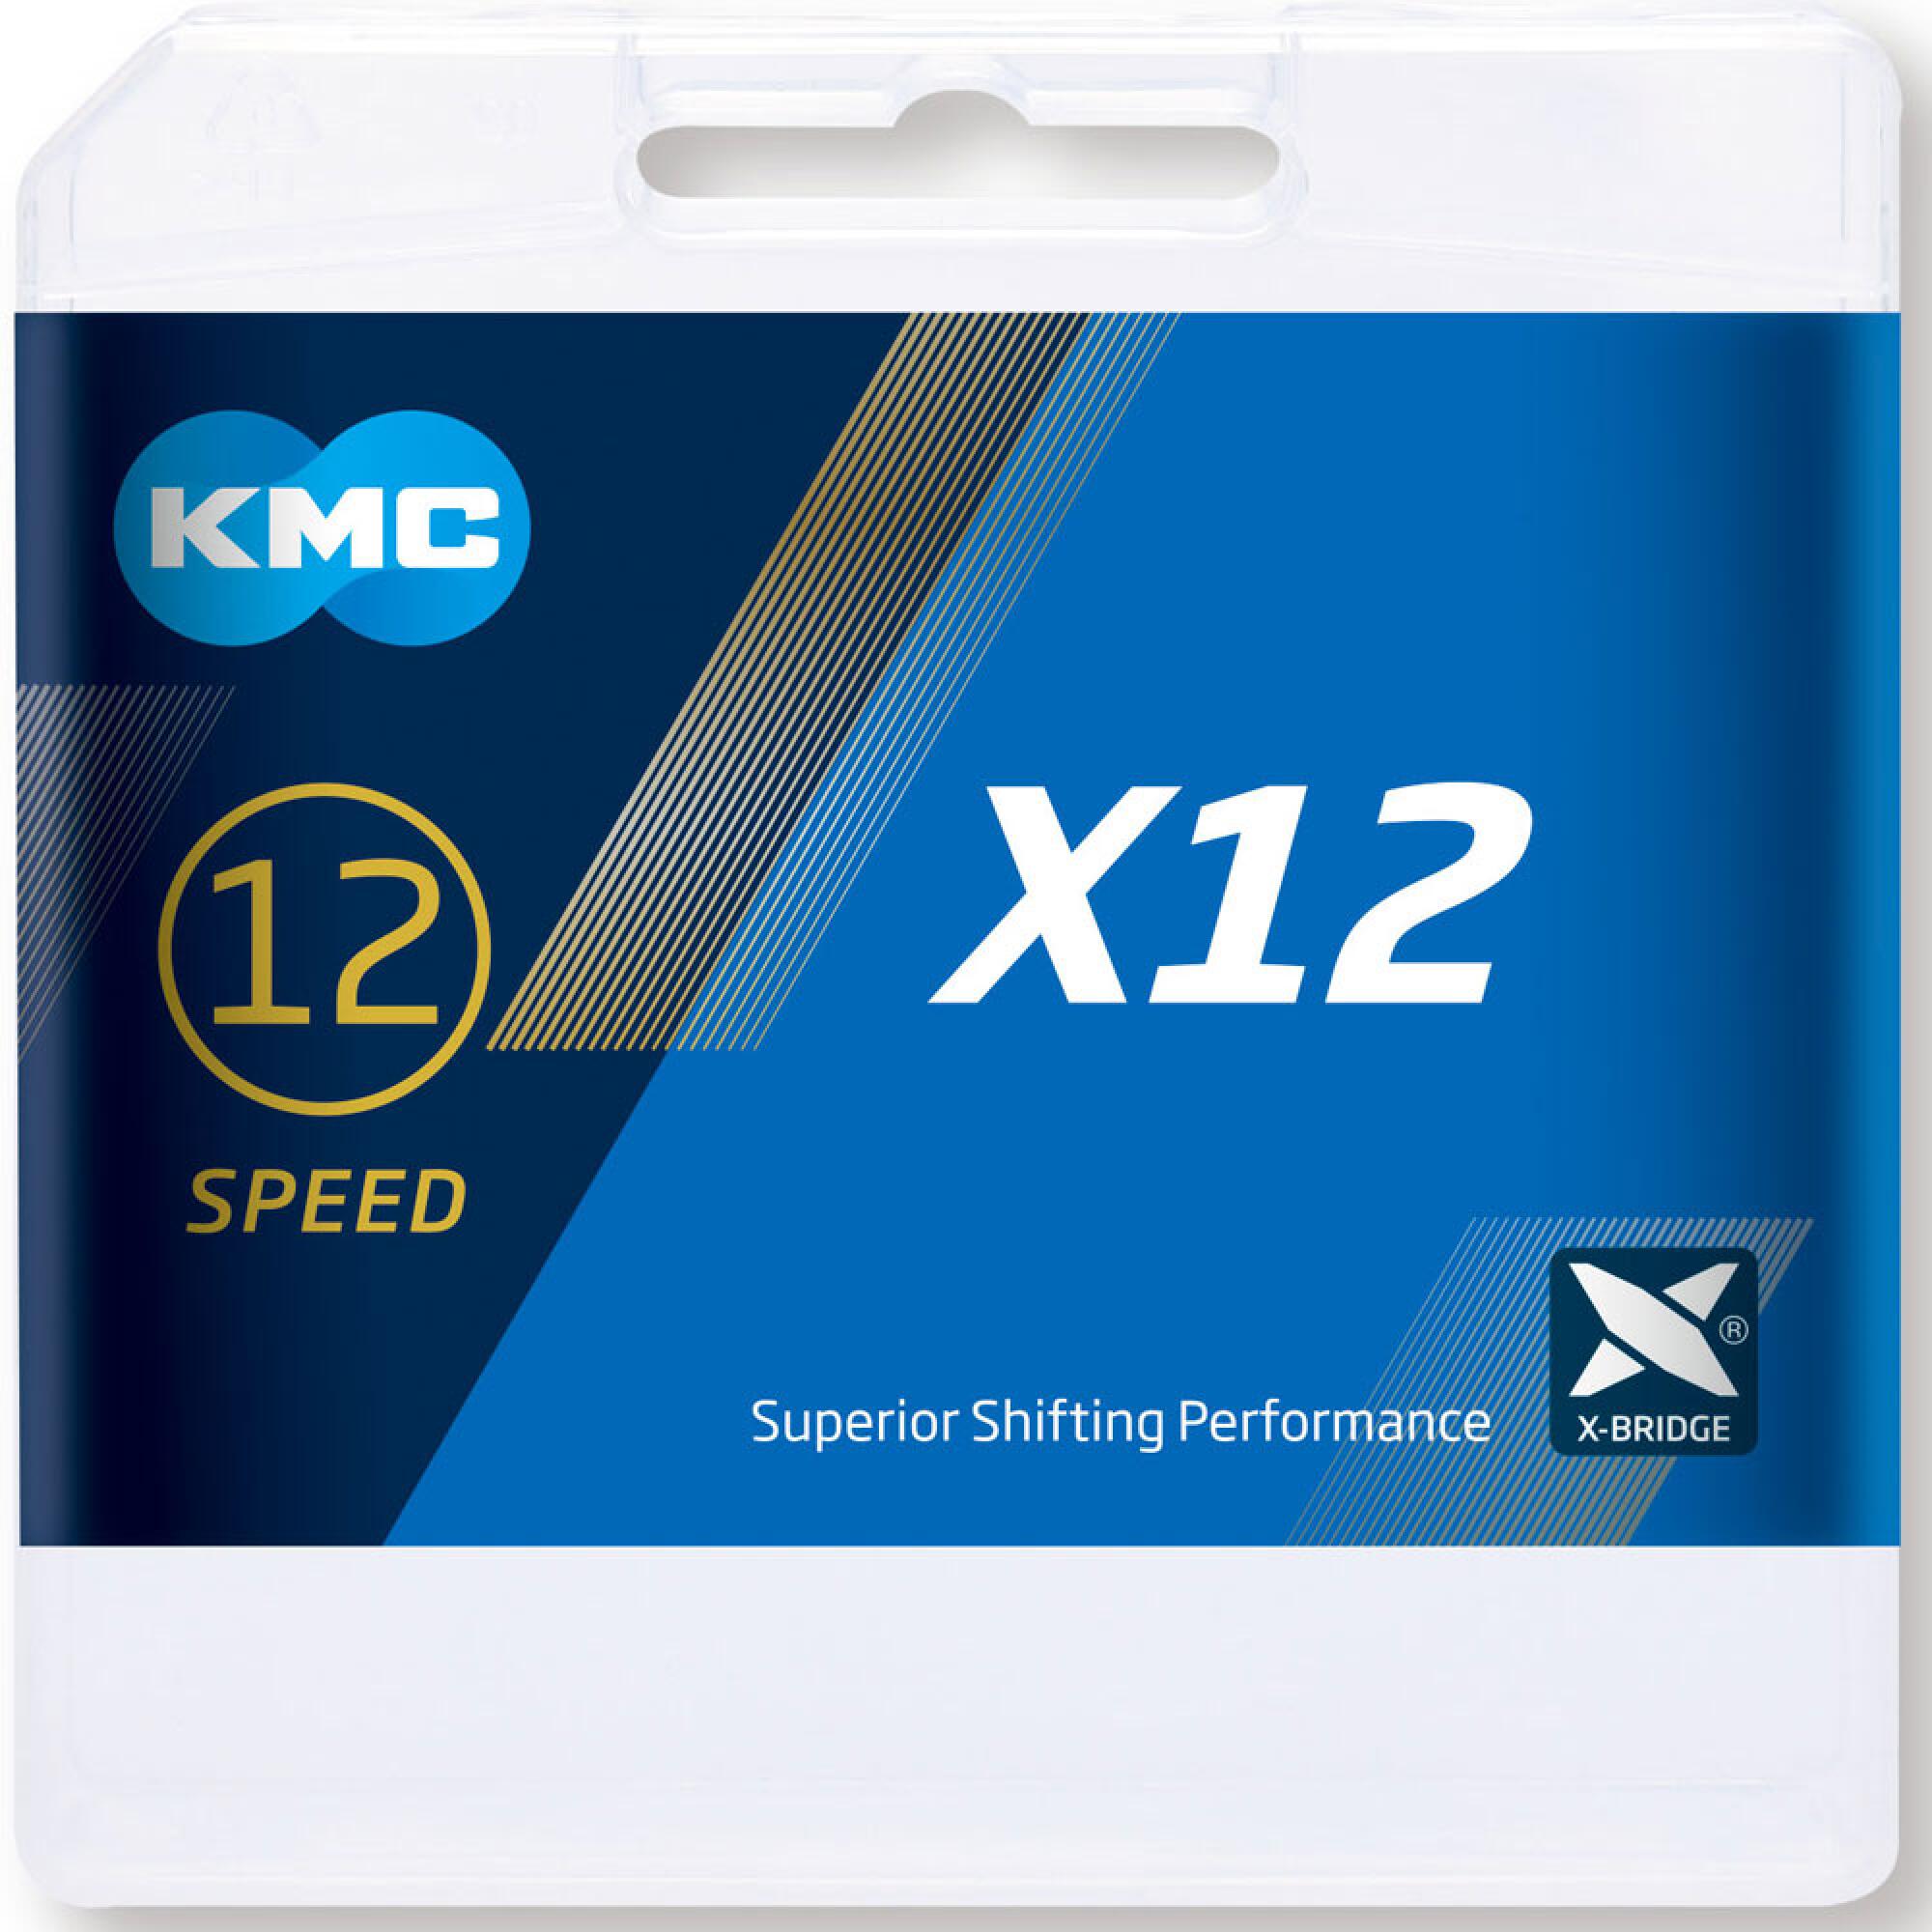 KMC KMC 12 Speed Bike Chain X12 126 links